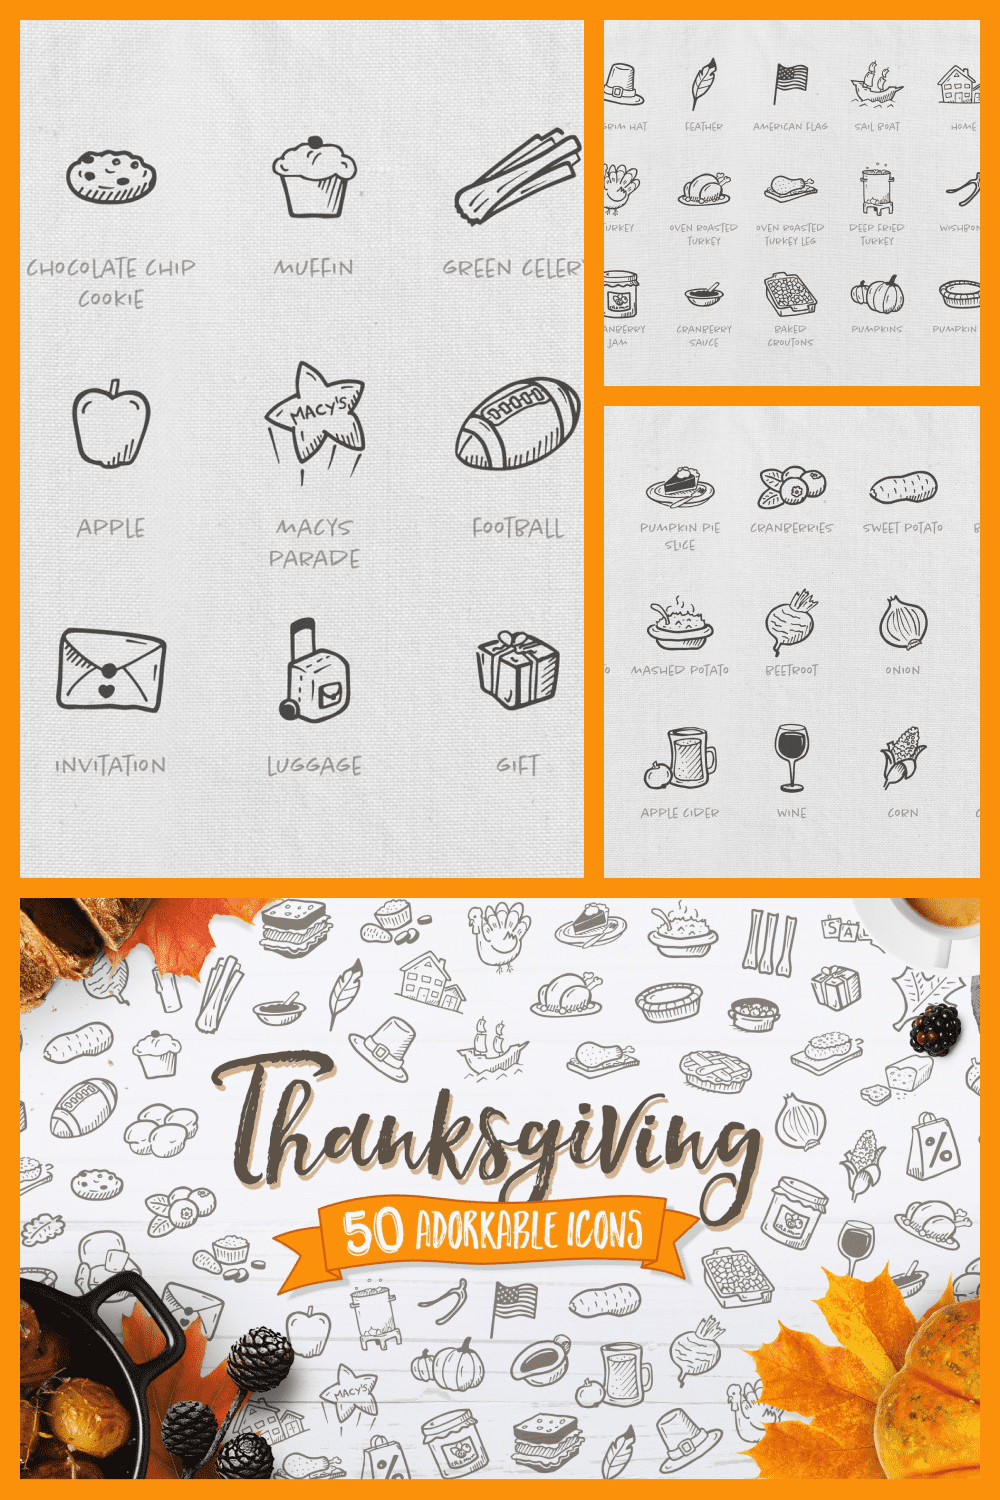 Thanksgiving - hand-drawn icons by good stuff no nonsense.